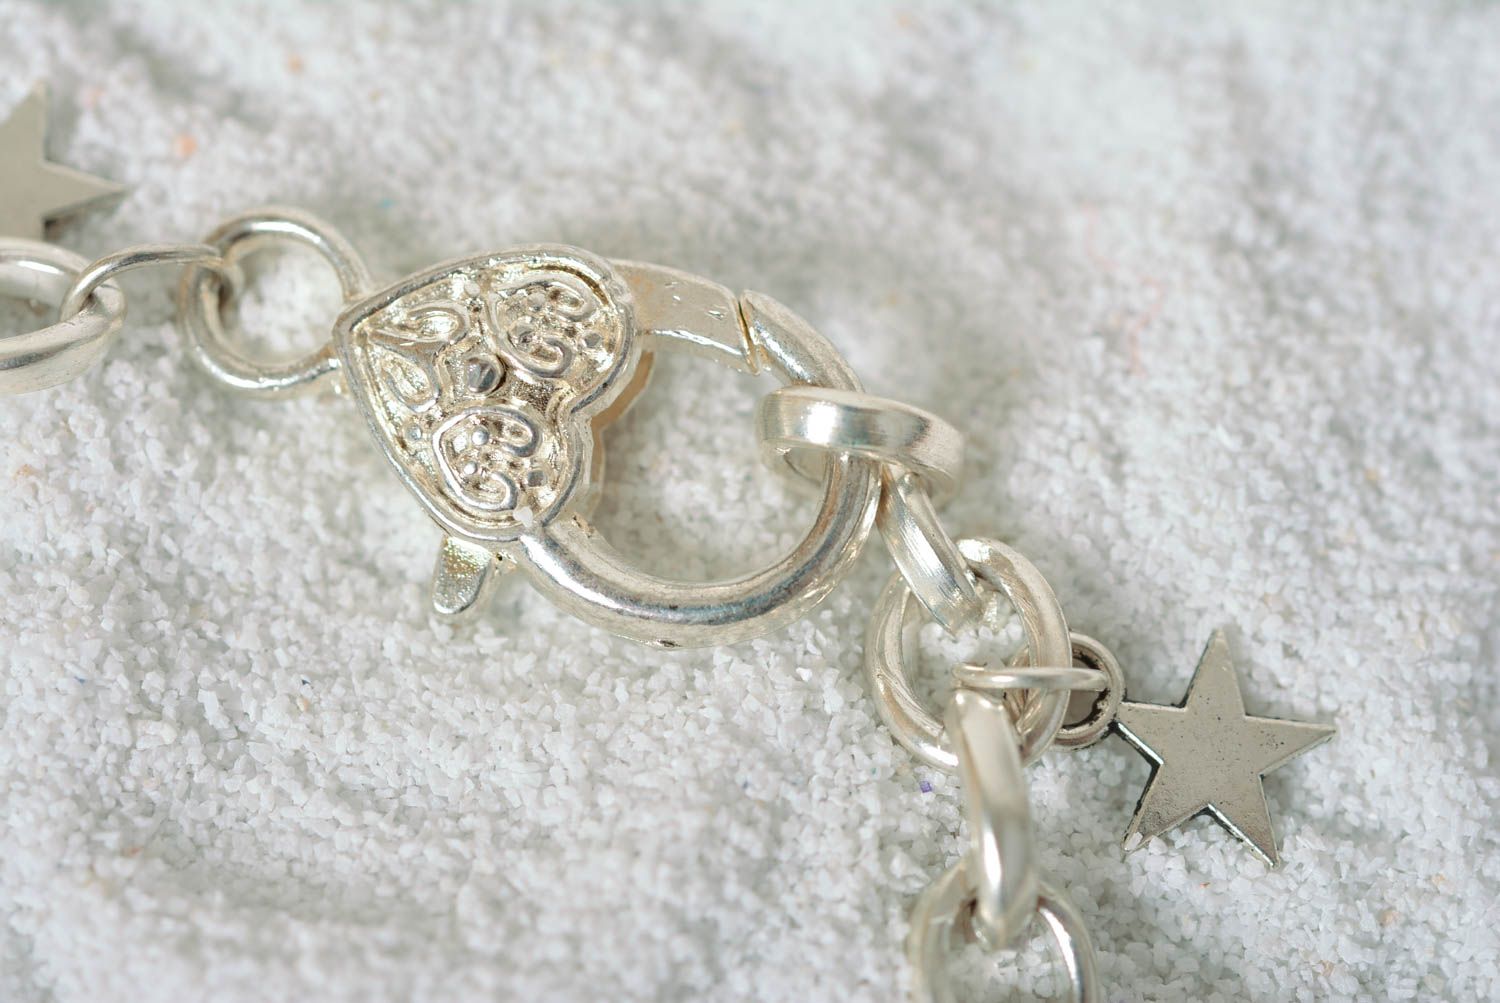 Metal bracelet homemade jewelry designer accessories charm bracelet cool gifts photo 5